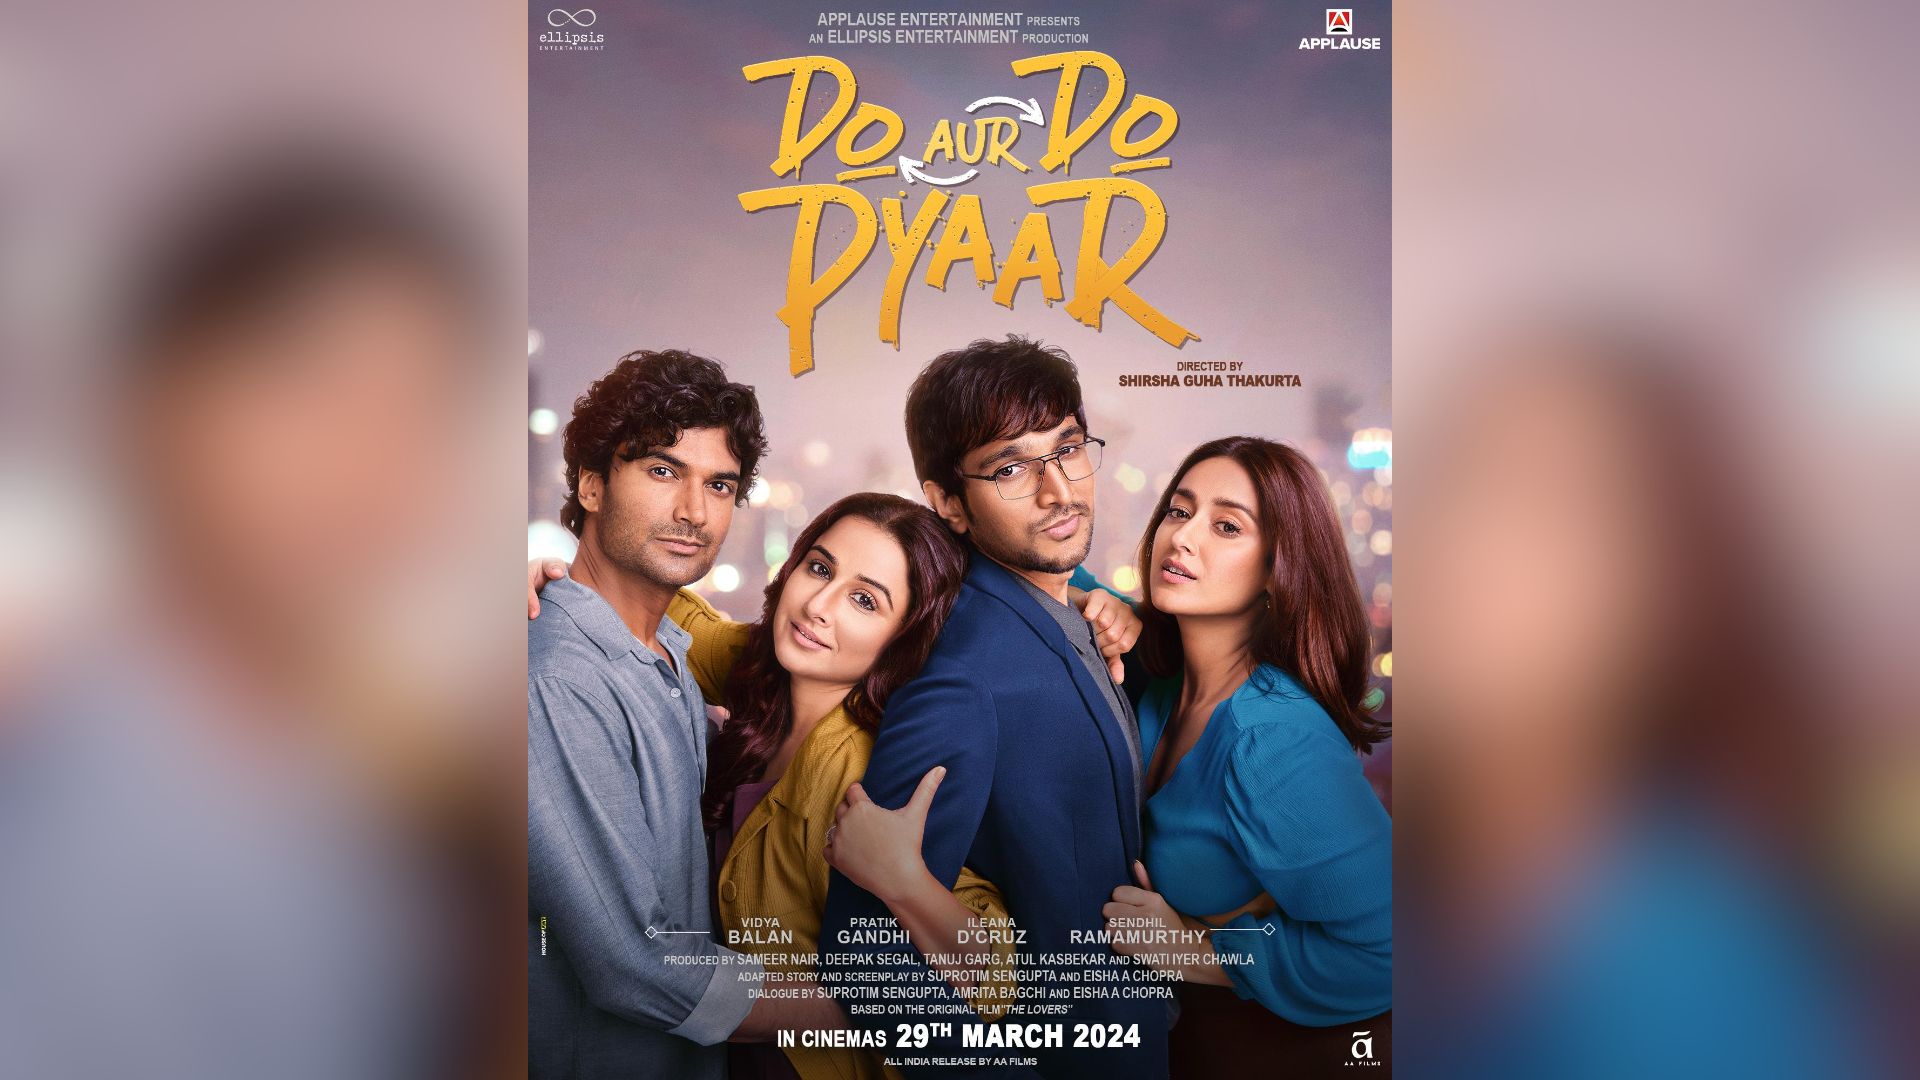 The release date for the Vidya Balan, Pratik Gandhi, and Ileana D’Cruz film Do Aur Do Pyaar is announced